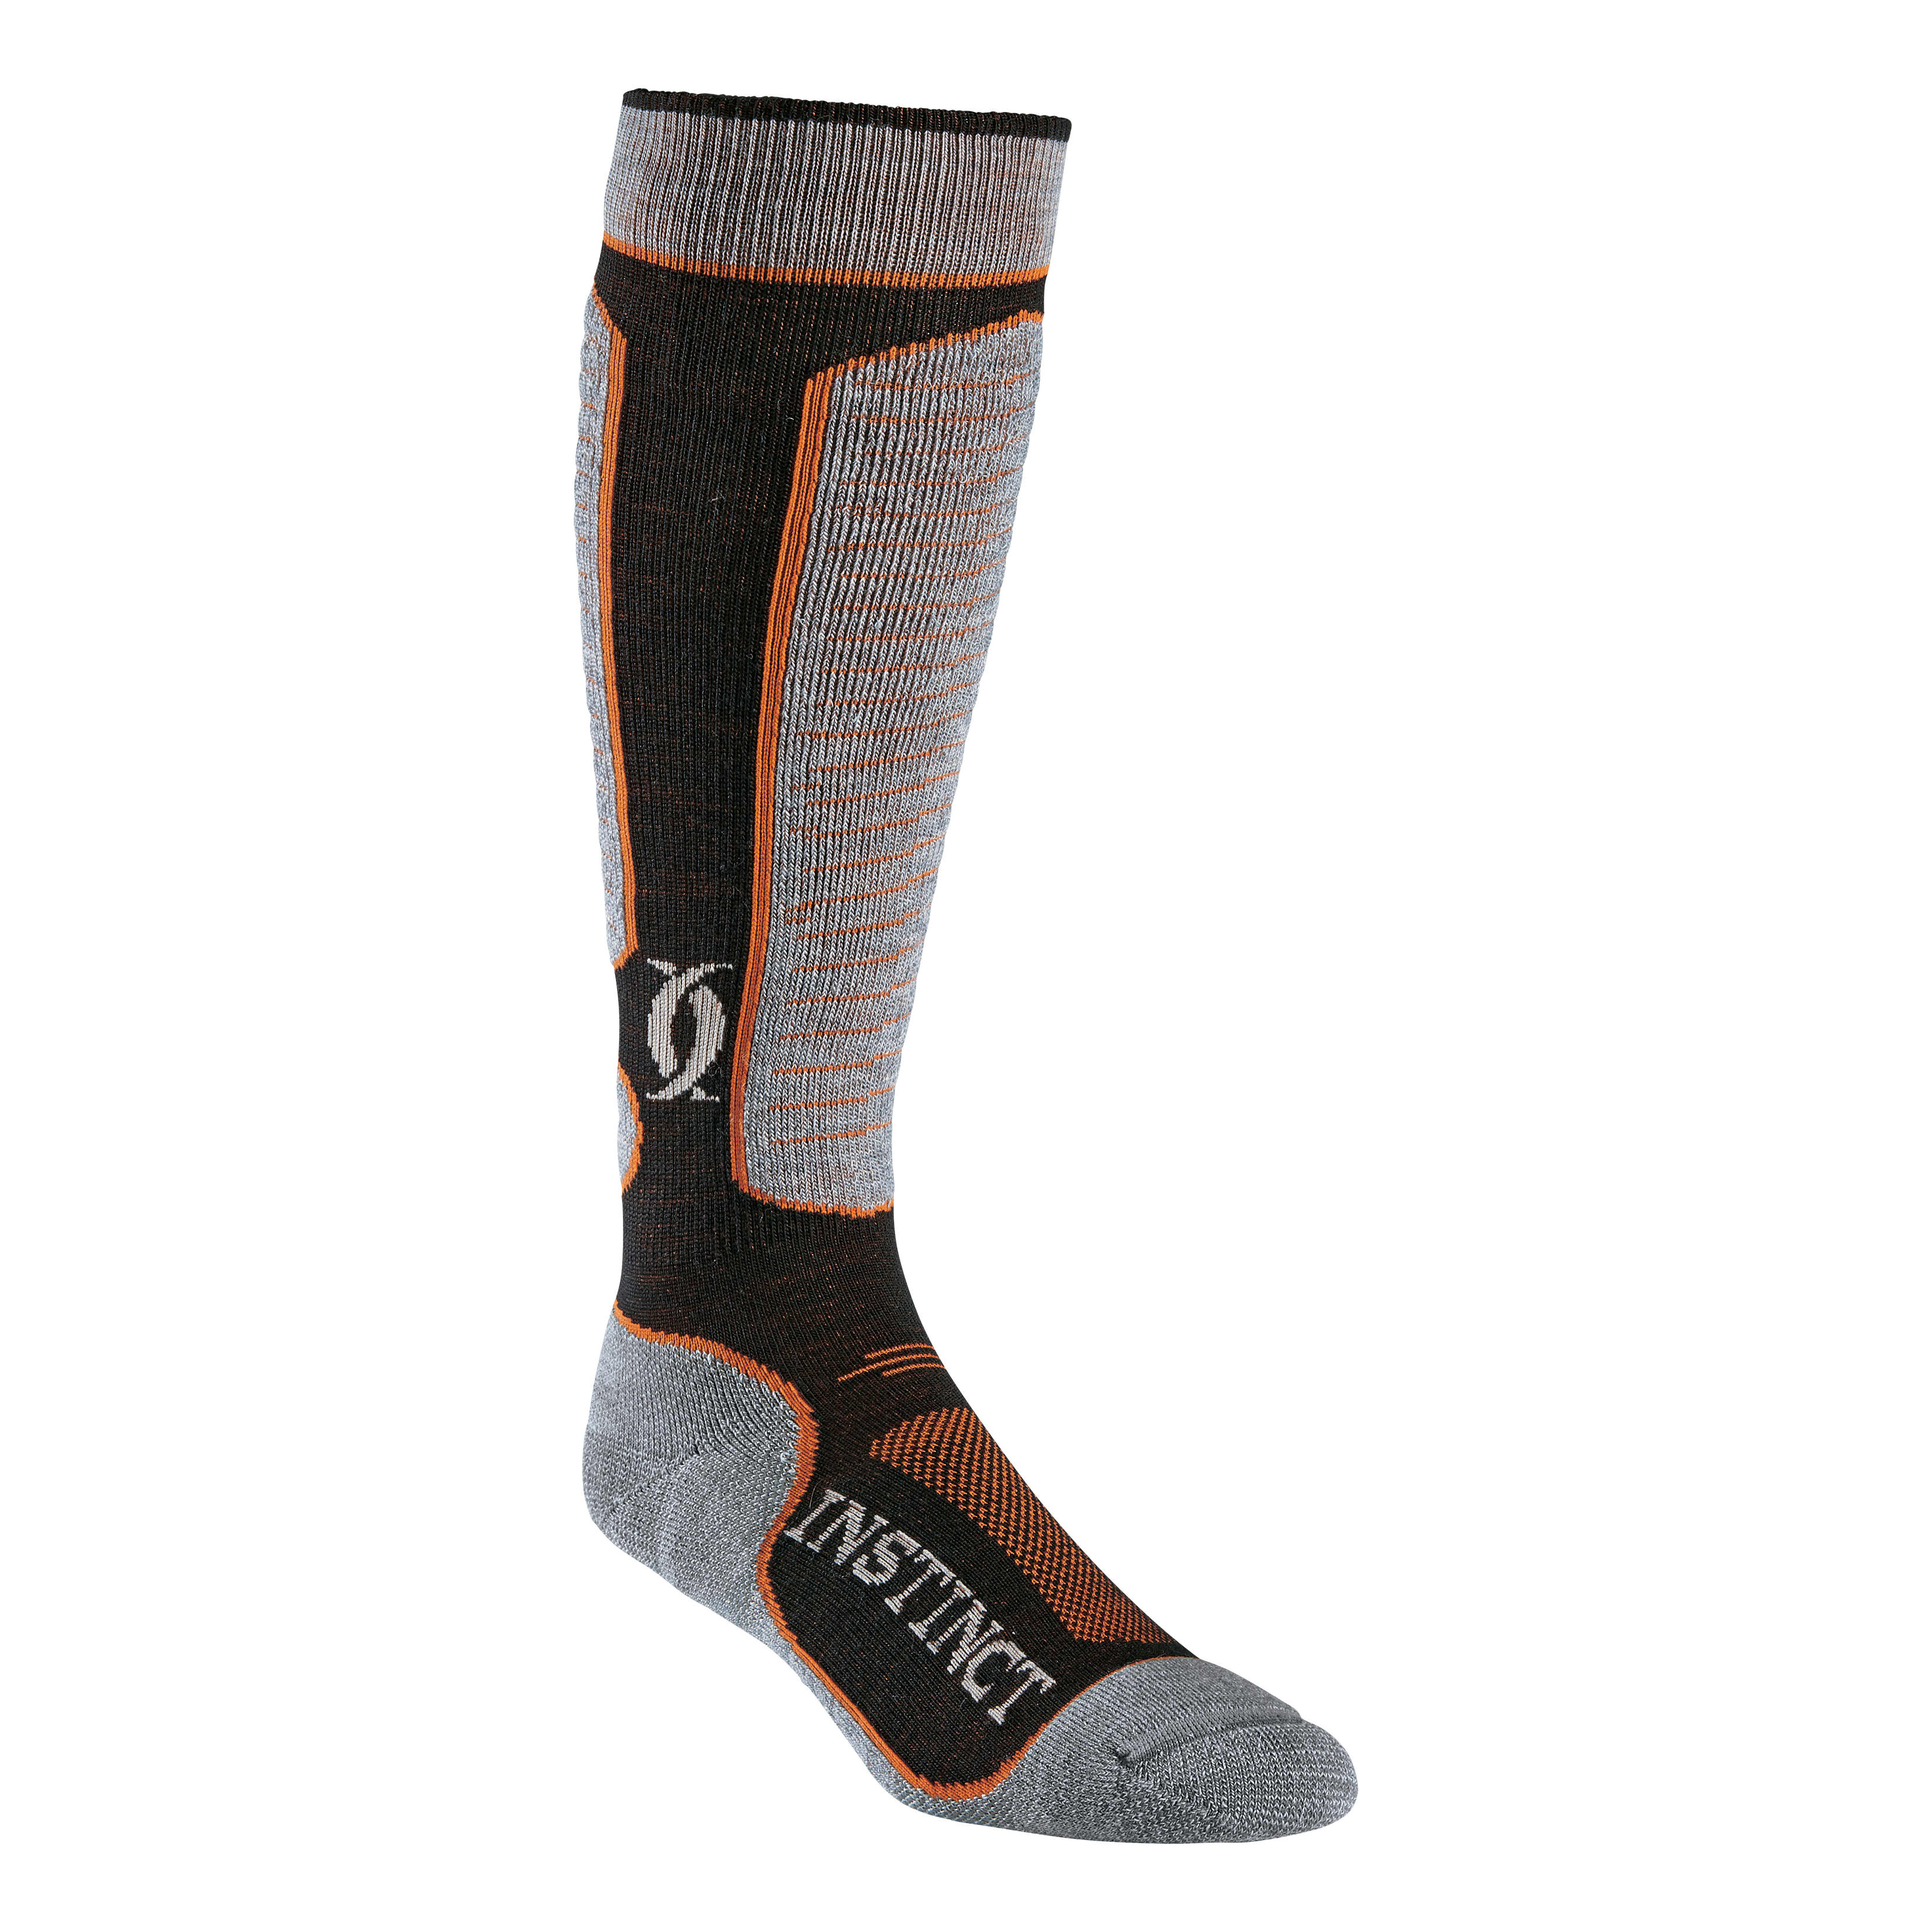 Heat Holder Men's Cream Block Twist LITE Socks| Warm + Soft, Hiking, Cabin,  Cozy at Home Socks | 5X Warmer Than Cotton Socks